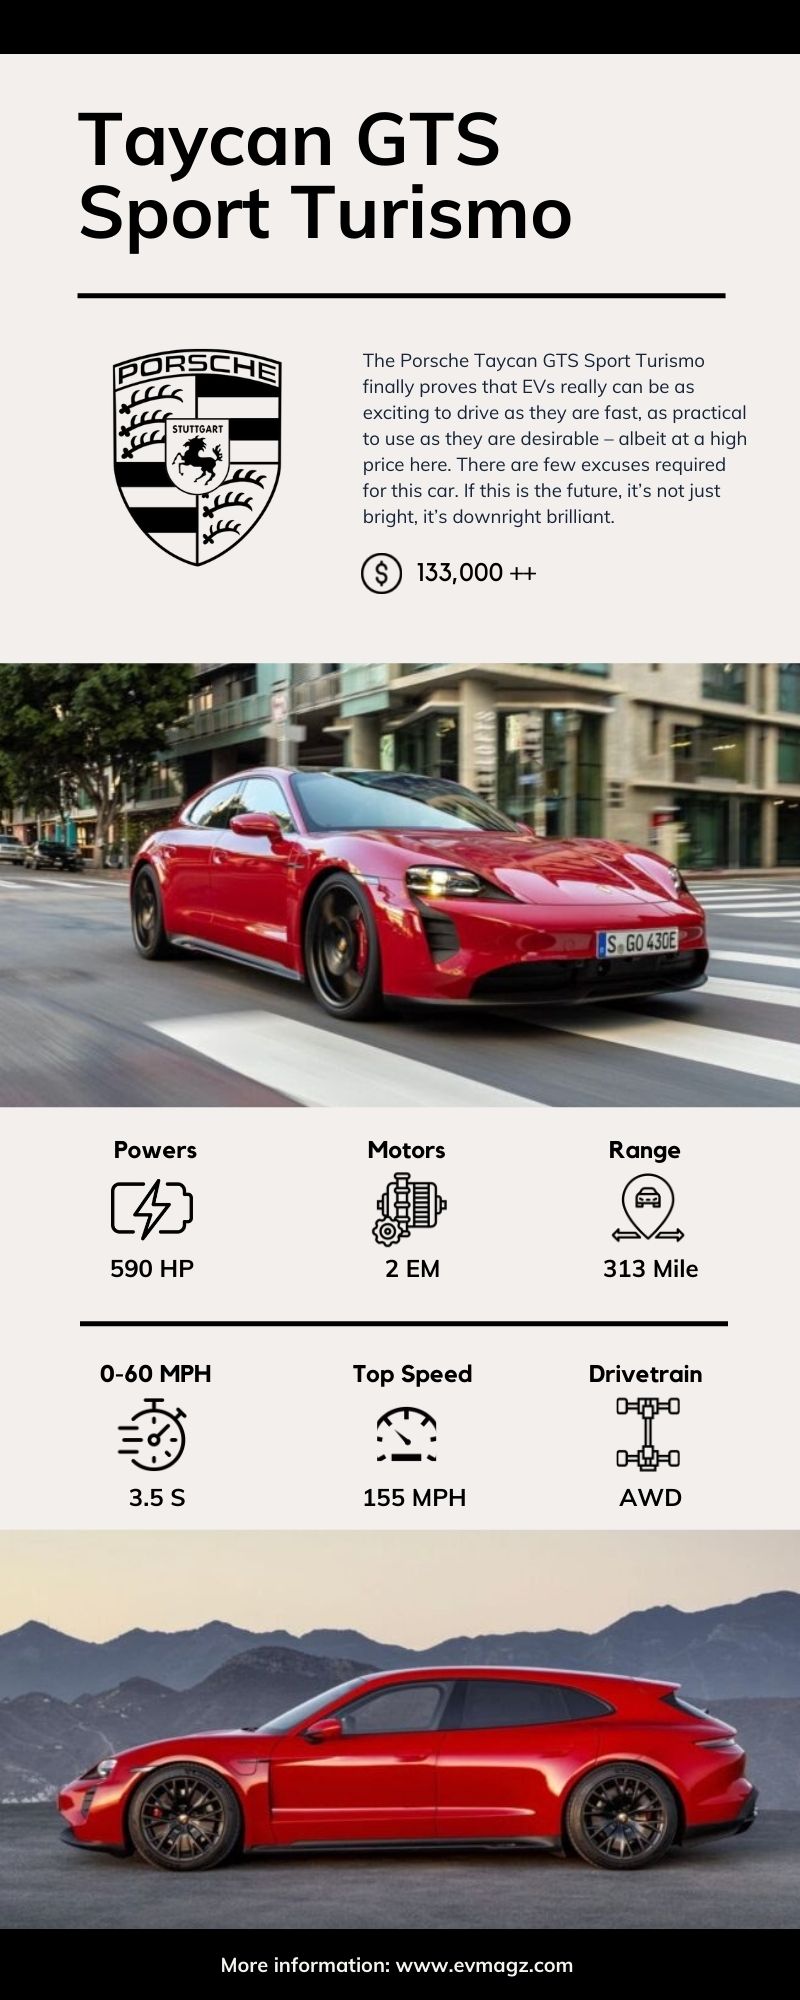 Taycan GTS Sport Turismo Infographic - Porsche Taycan GTS Sport Turismo Price and Specifications [Infographic]